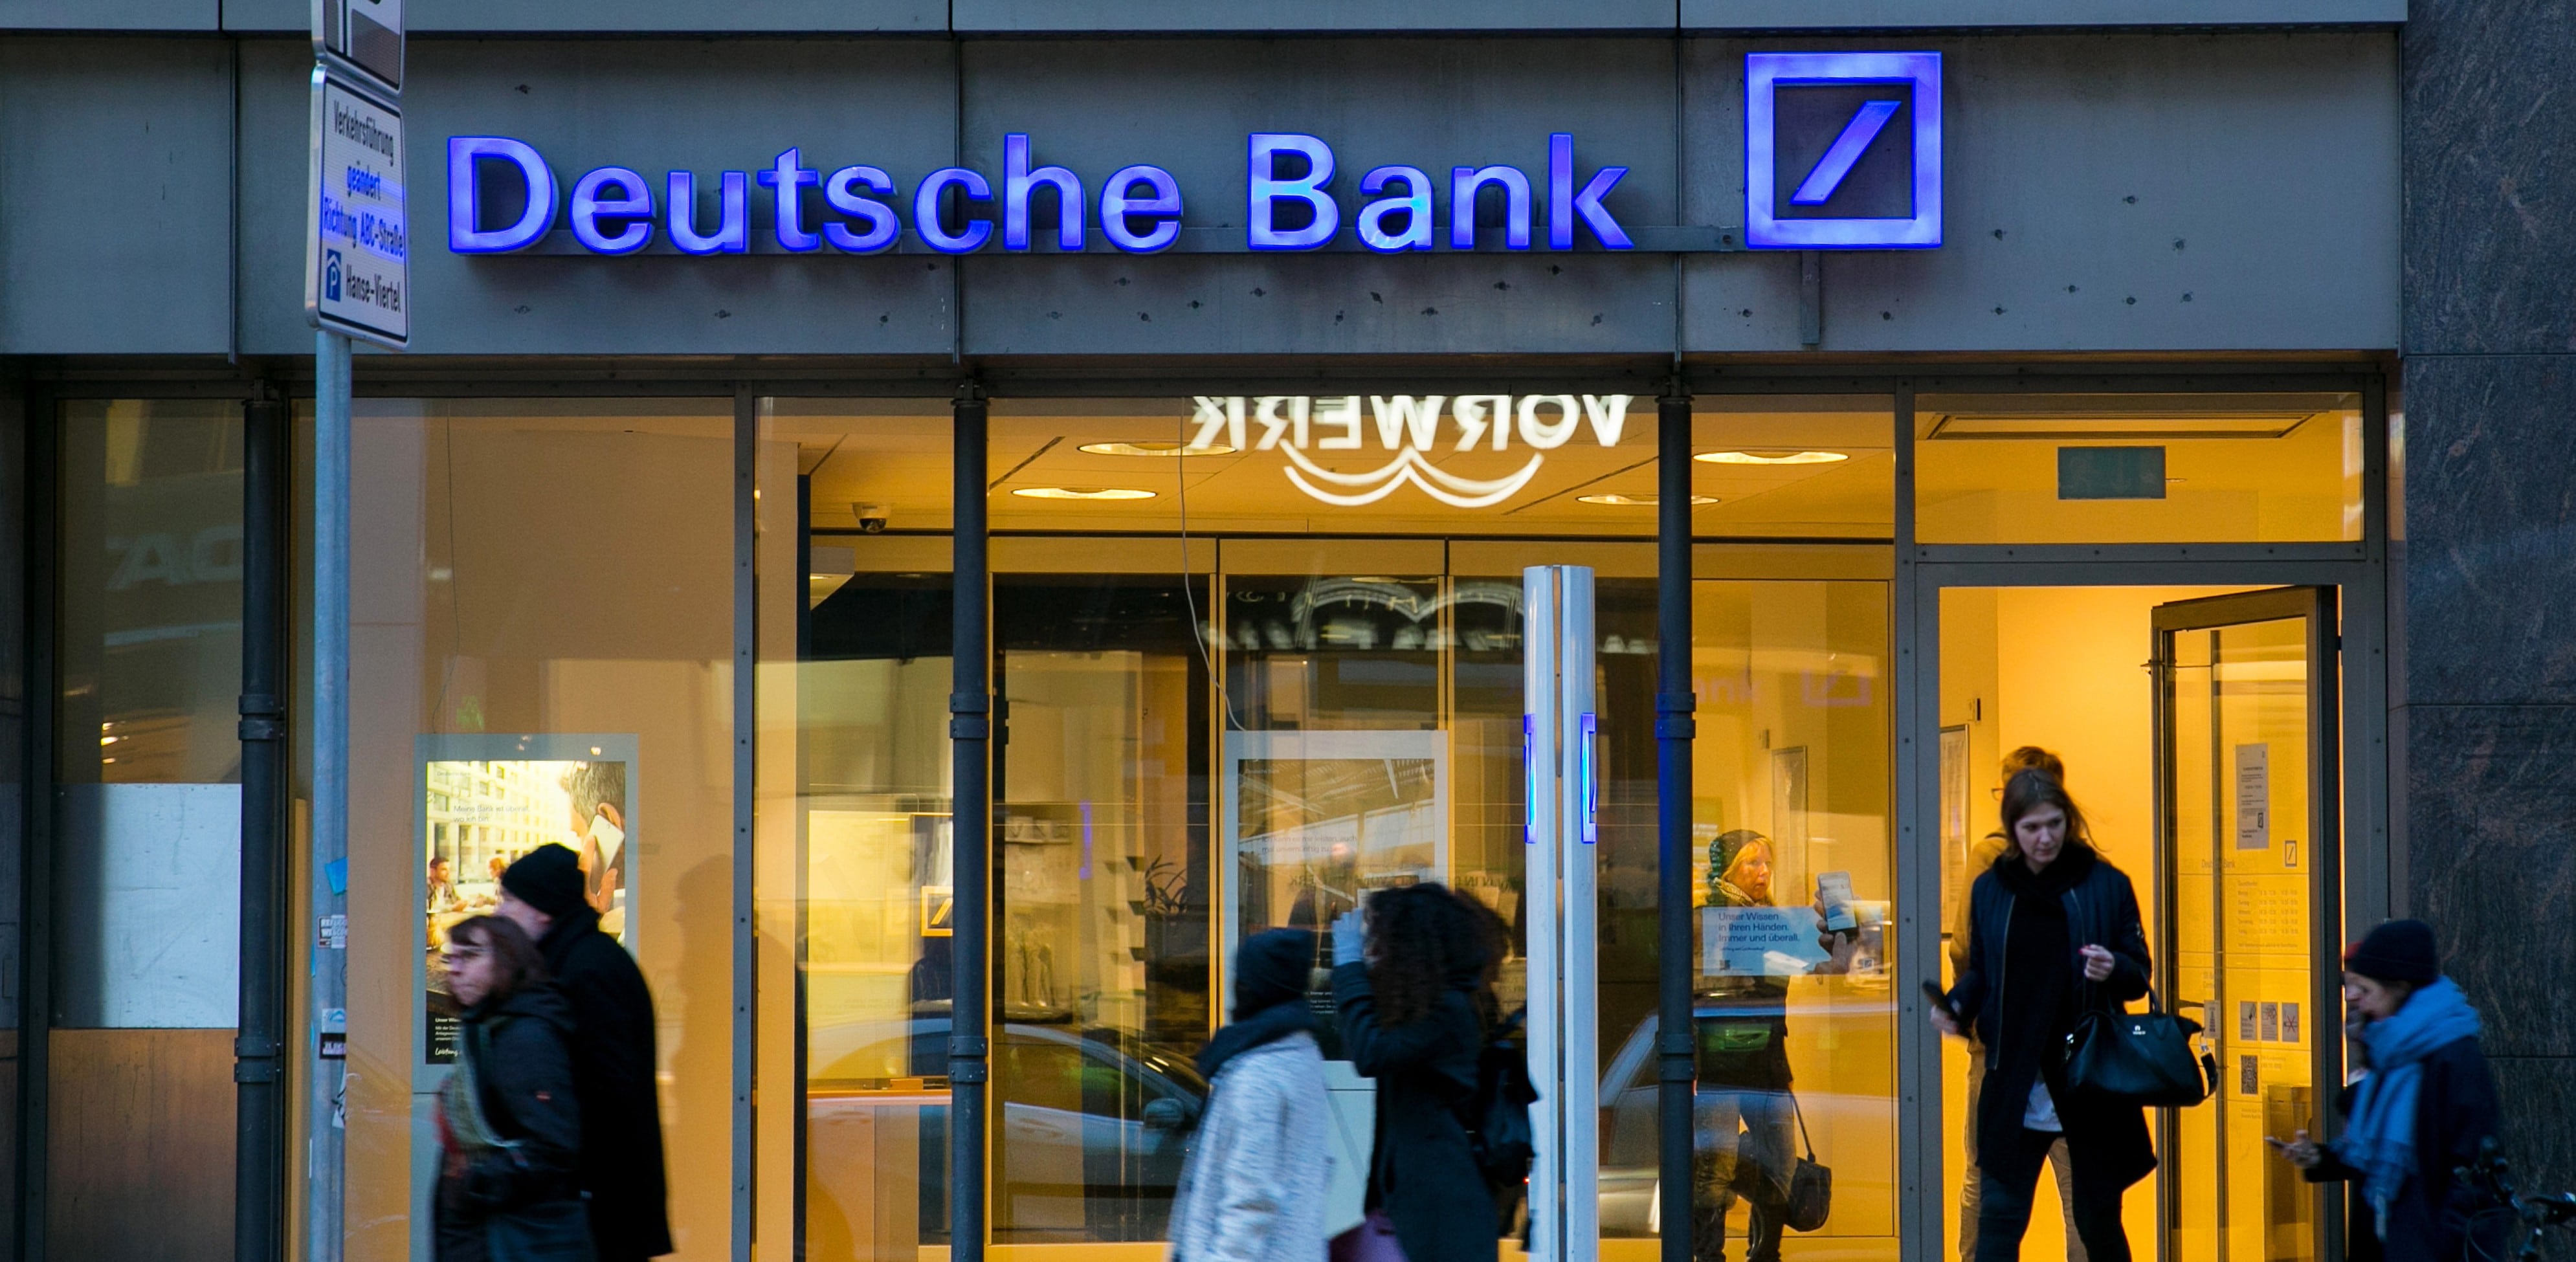 Germany Wants U.S. to Treat Deutsche Bank Fairly on $14b Claim